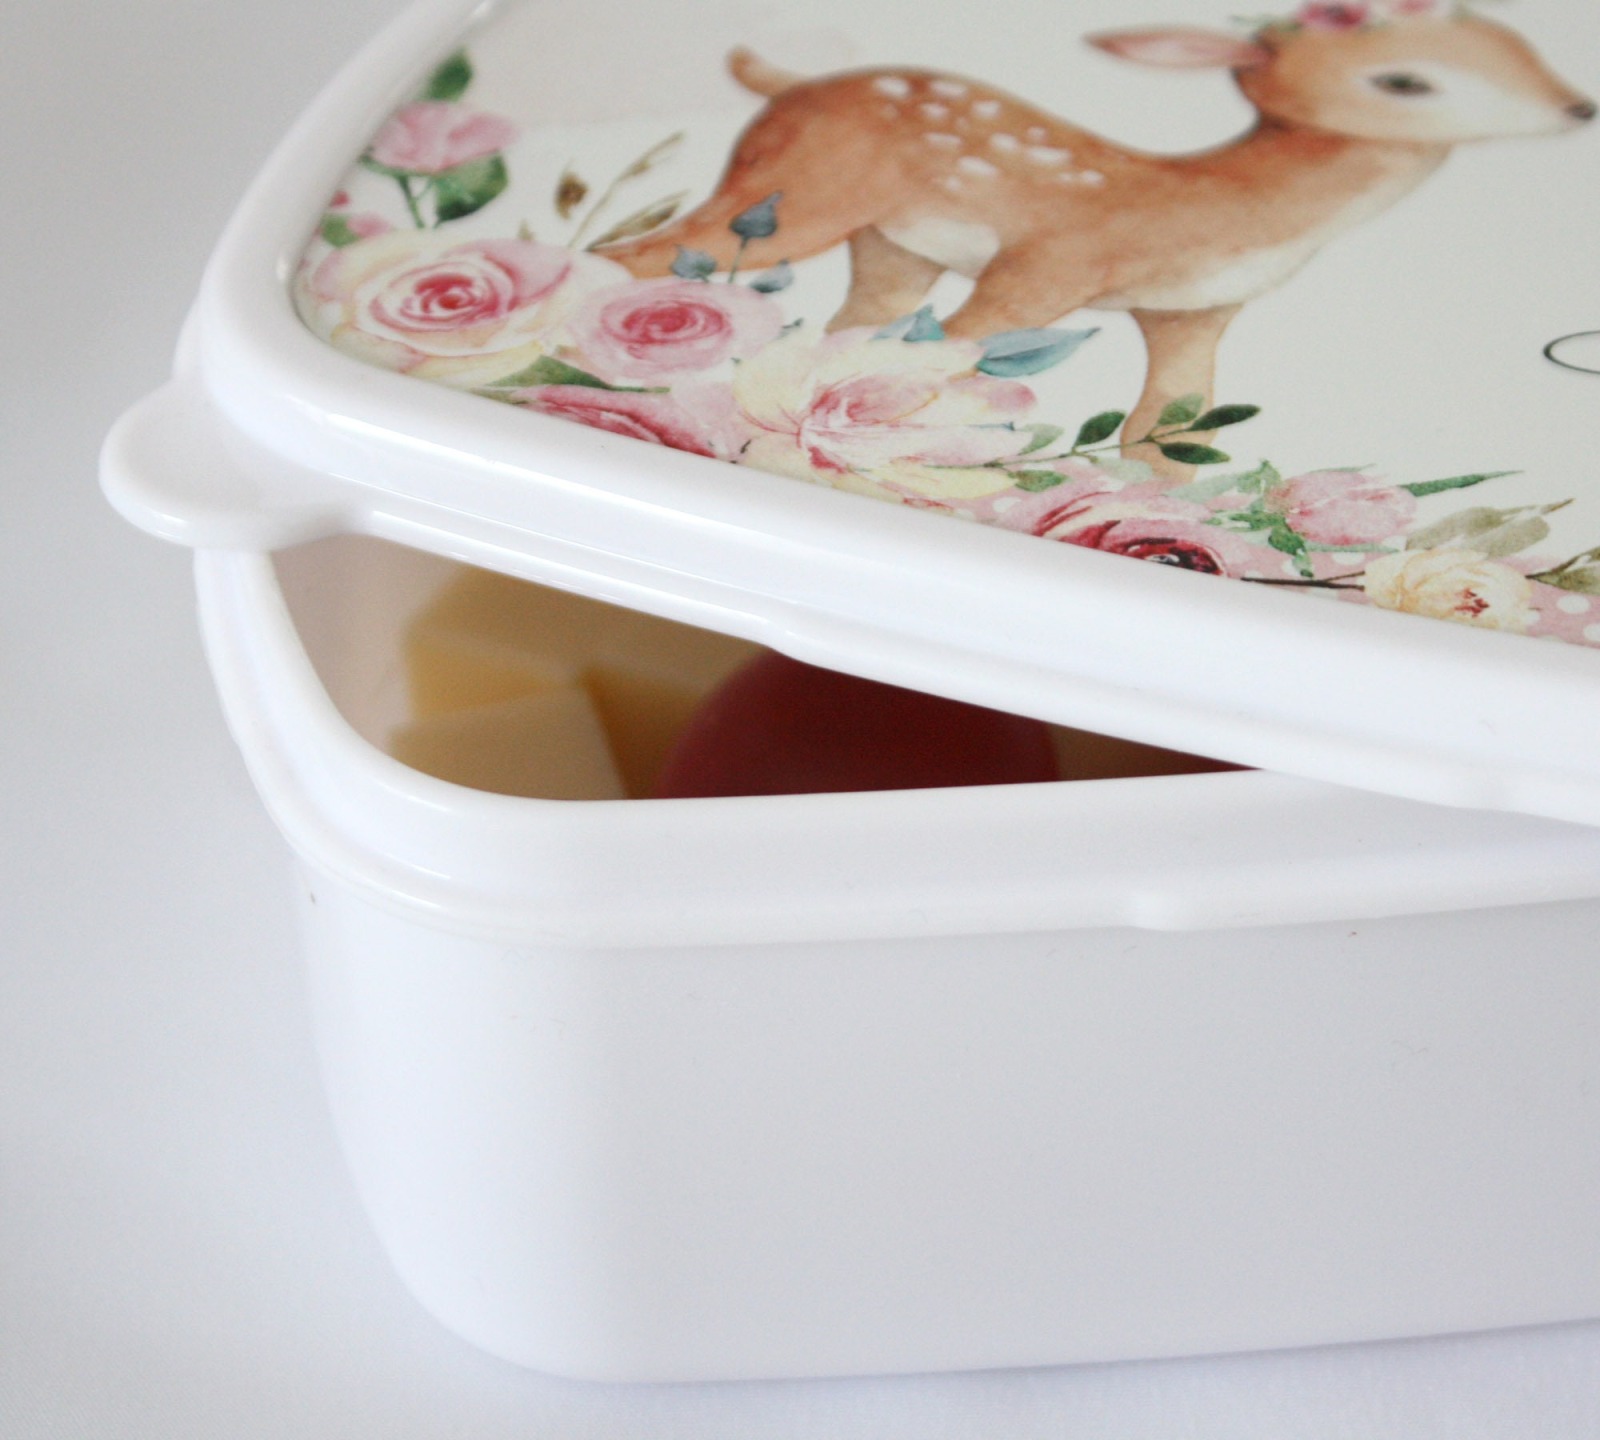 Brotdose Brotbox Lunchbox personalisiert Seepferdchen 2